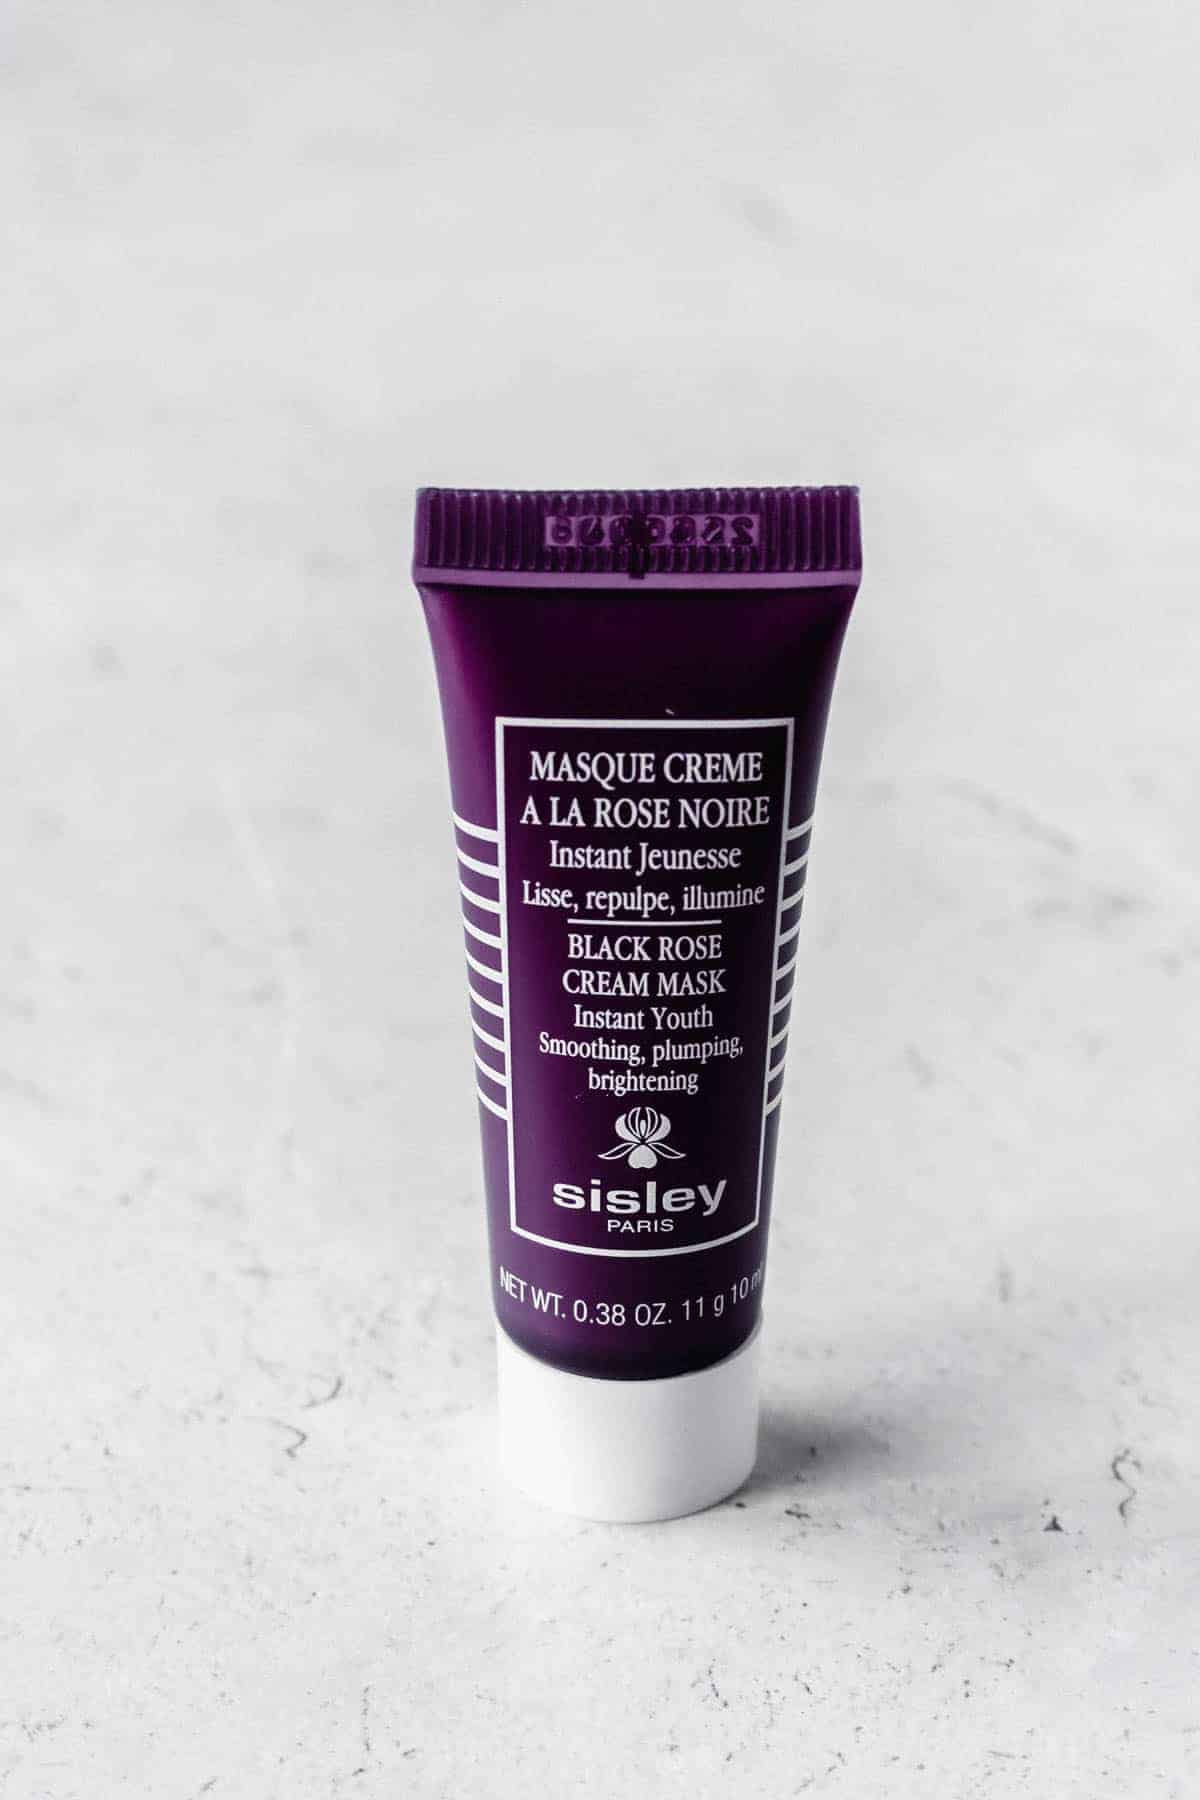 Sisley Paris Black Rose Cream Mask sample tube on a white background